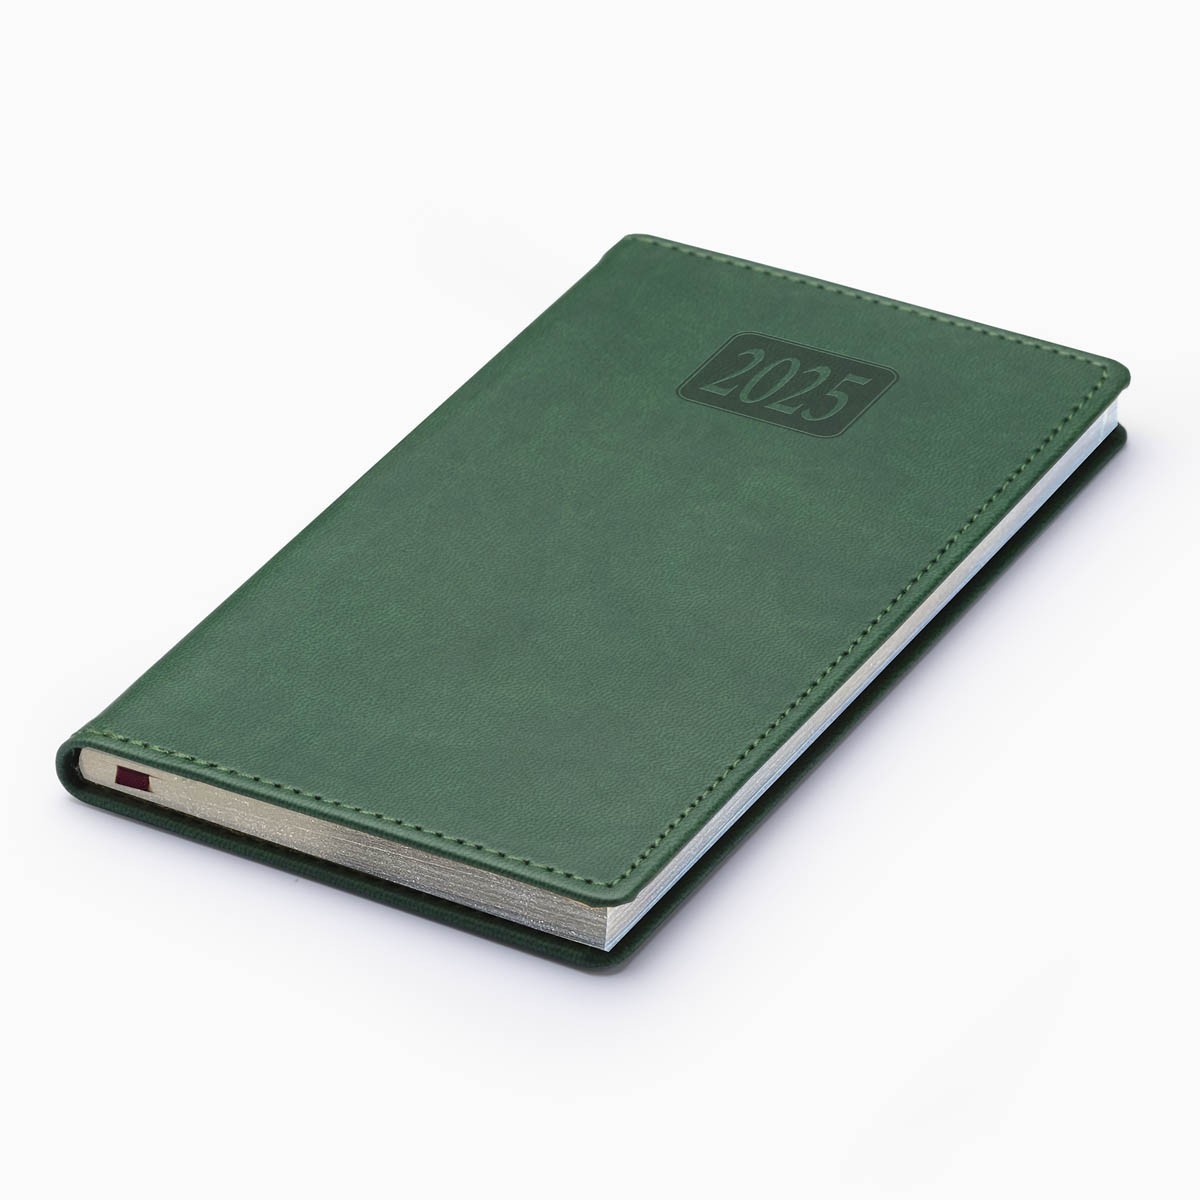 Rio Pocket Diary - White Pages